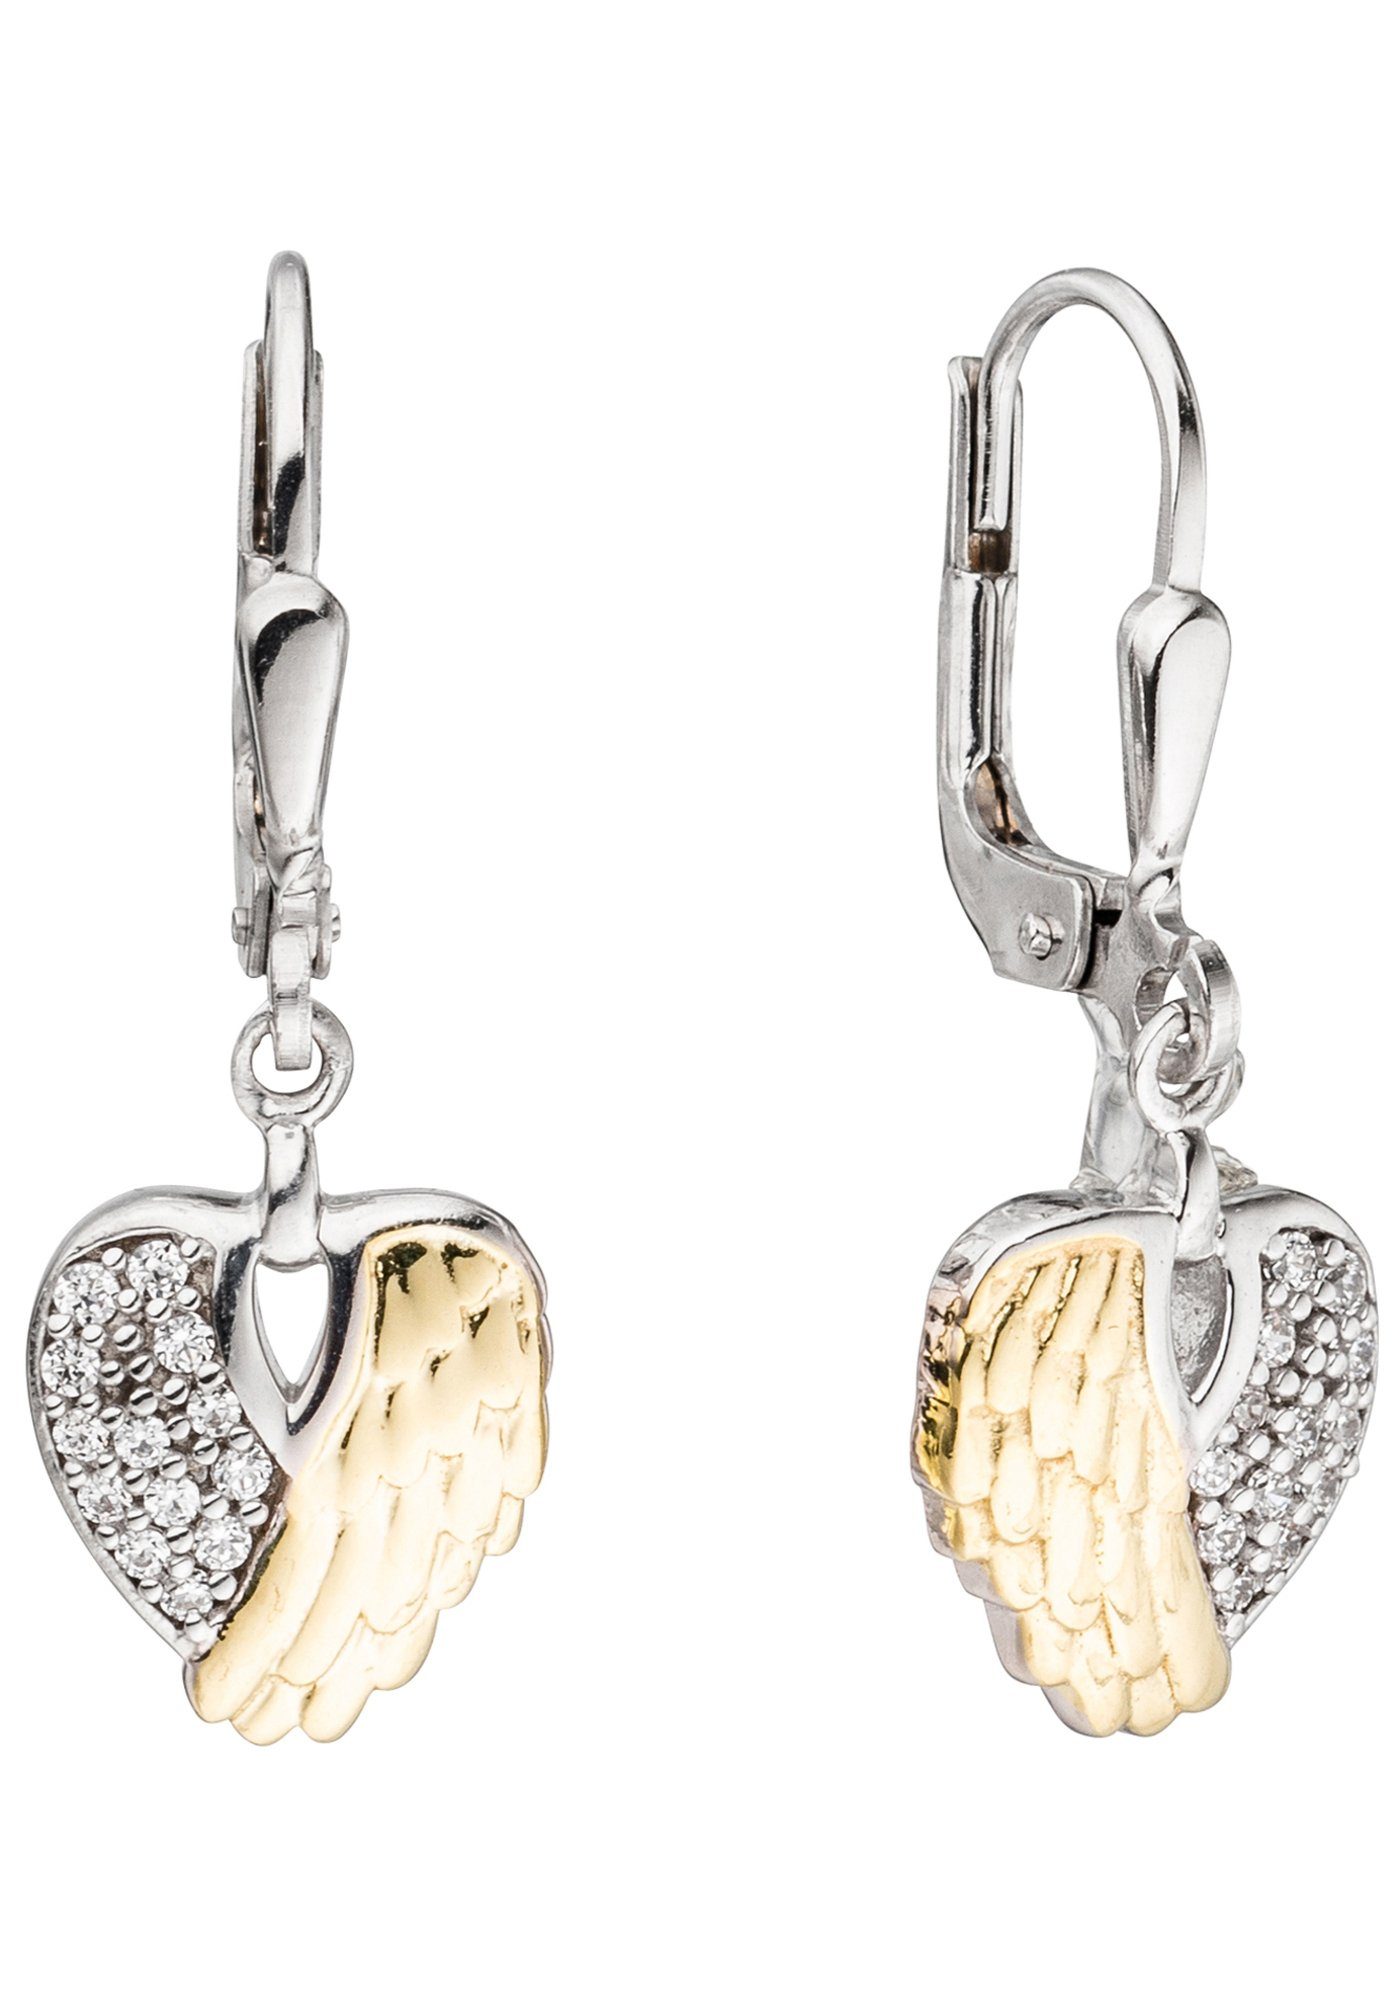 JOBO Paar Ohrhänger Herz Flügel, 925 Silber bicolor mit Zirkonia | Ohrhänger